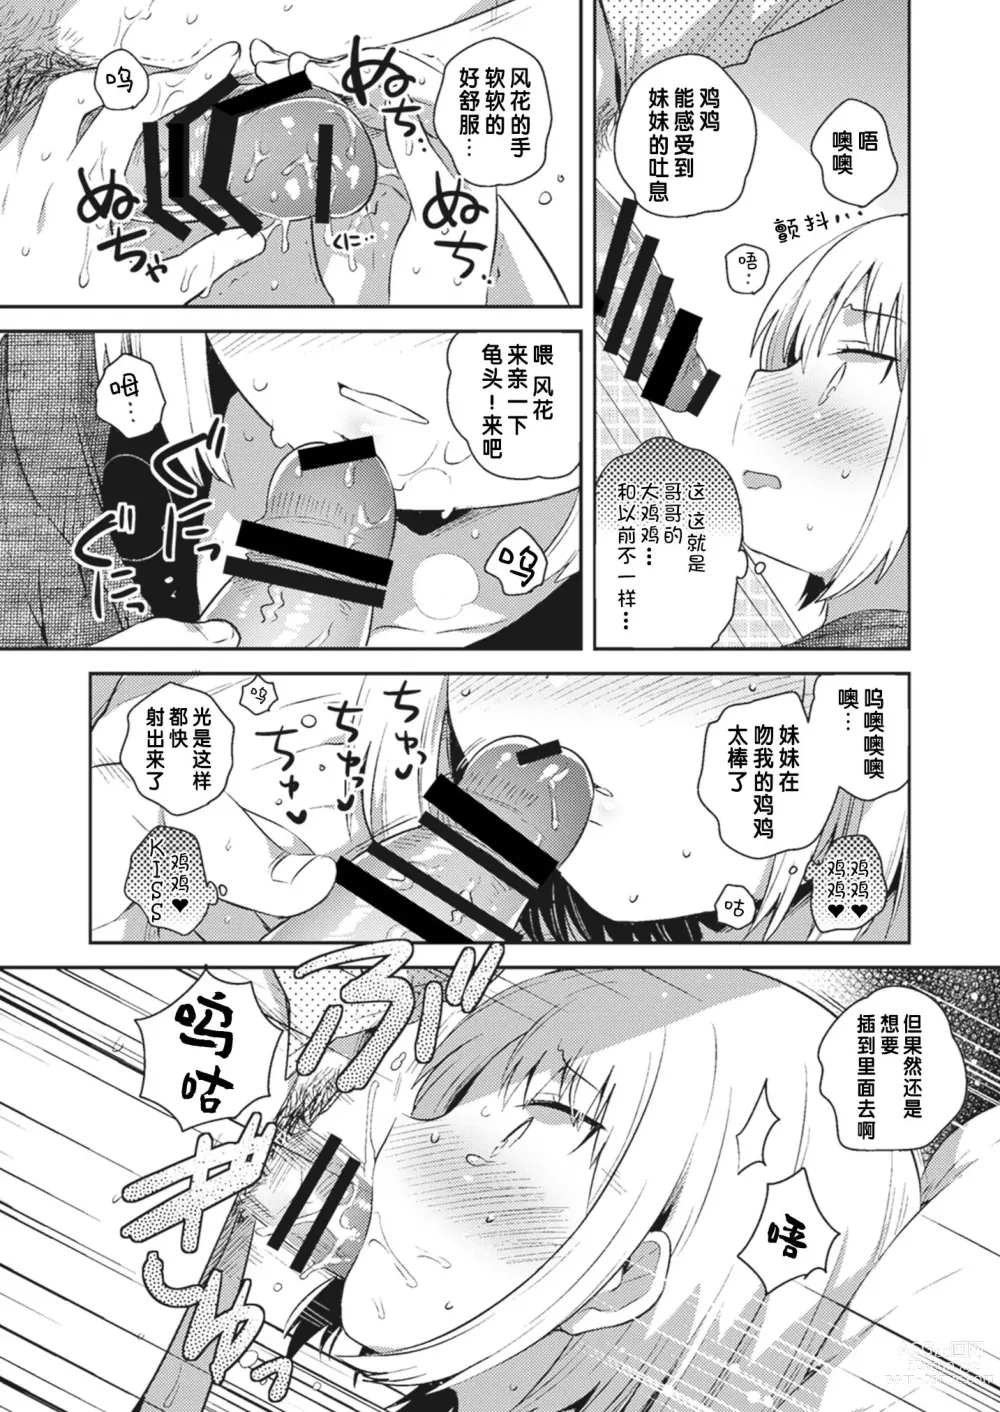 Page 8 of doujinshi 能听见妹妹的心声